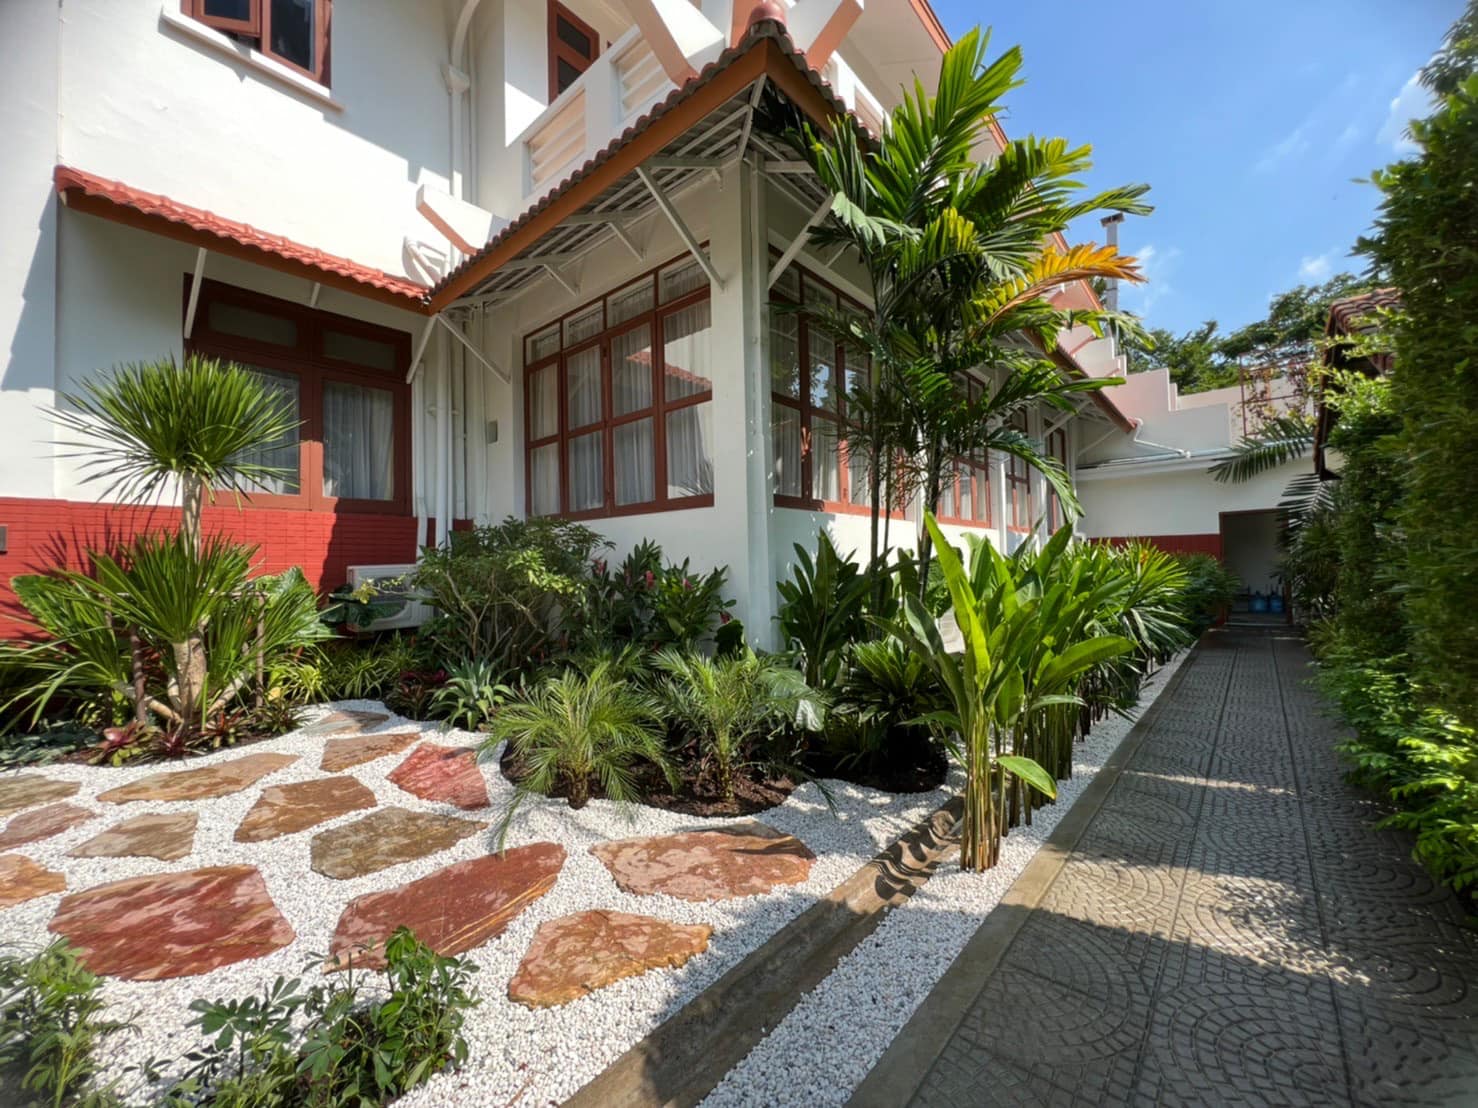 embassy tropical garden designs